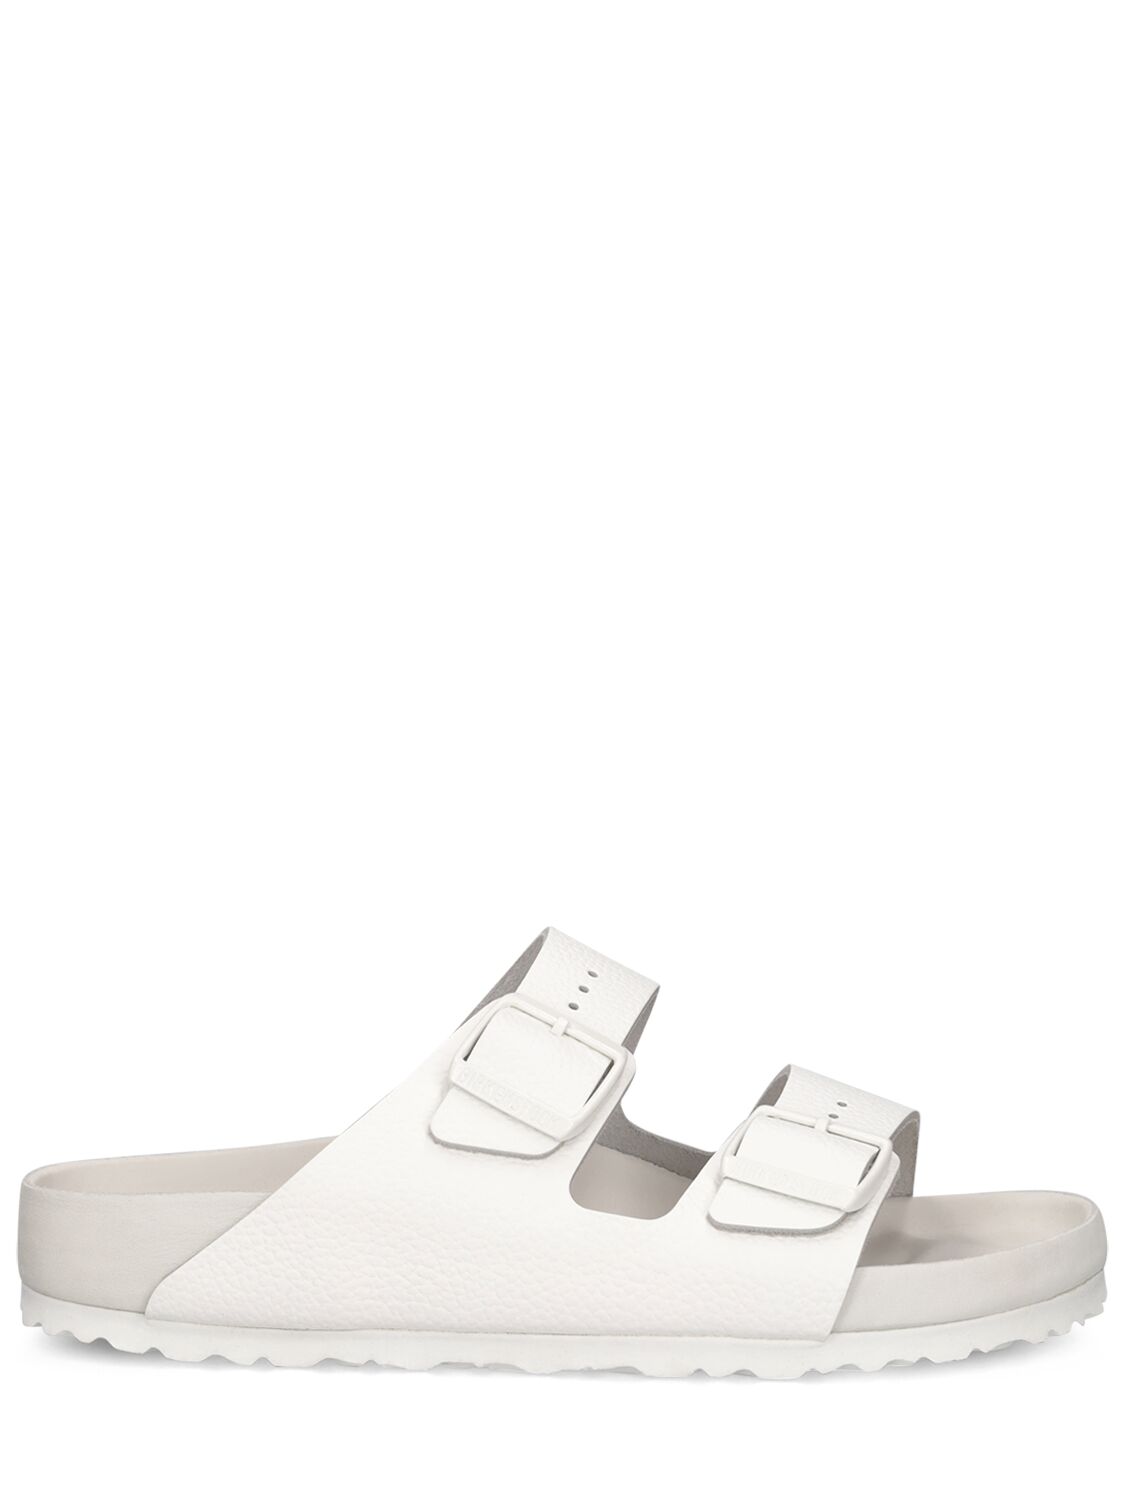 Birkenstock Arizona Exq Sandals In White